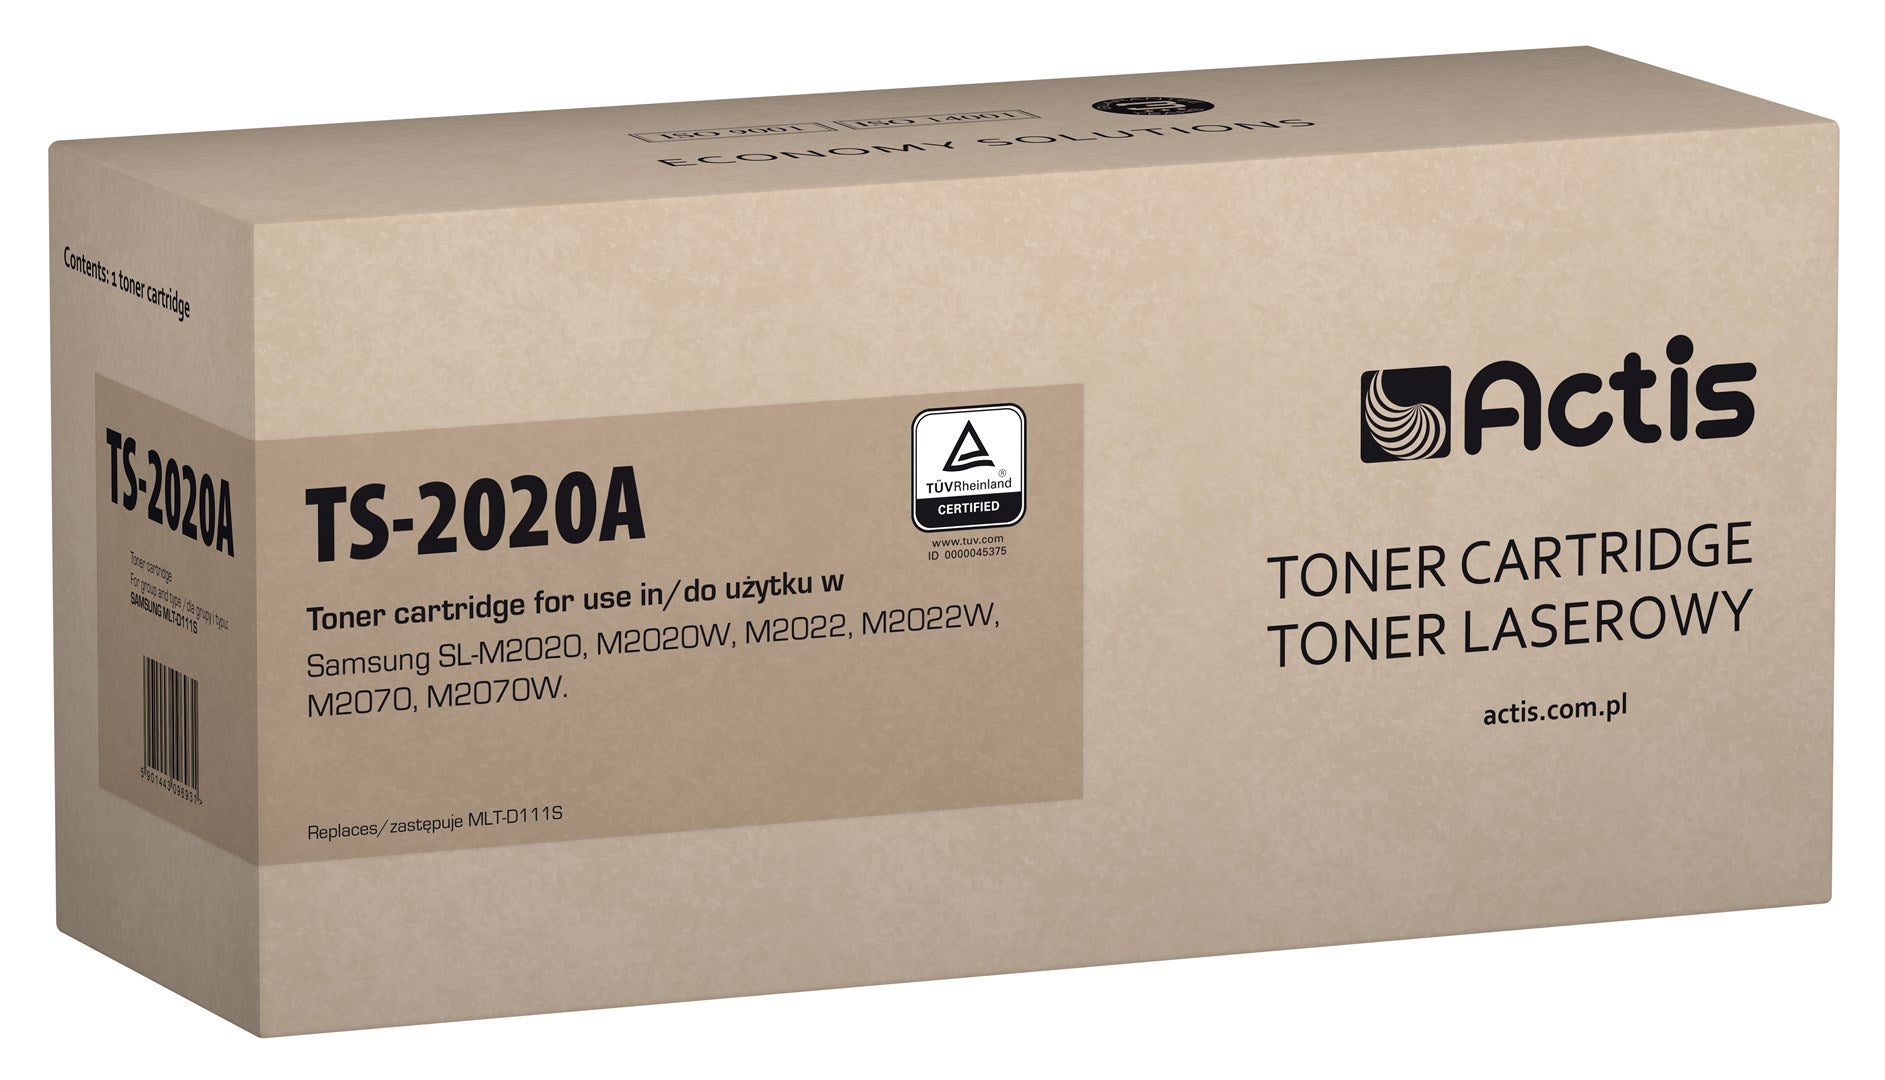 Actis TS-2020A väriaine (korvaava Samsung MLT-D111S, Standard, 1000 sivua, musta) - KorhoneCom